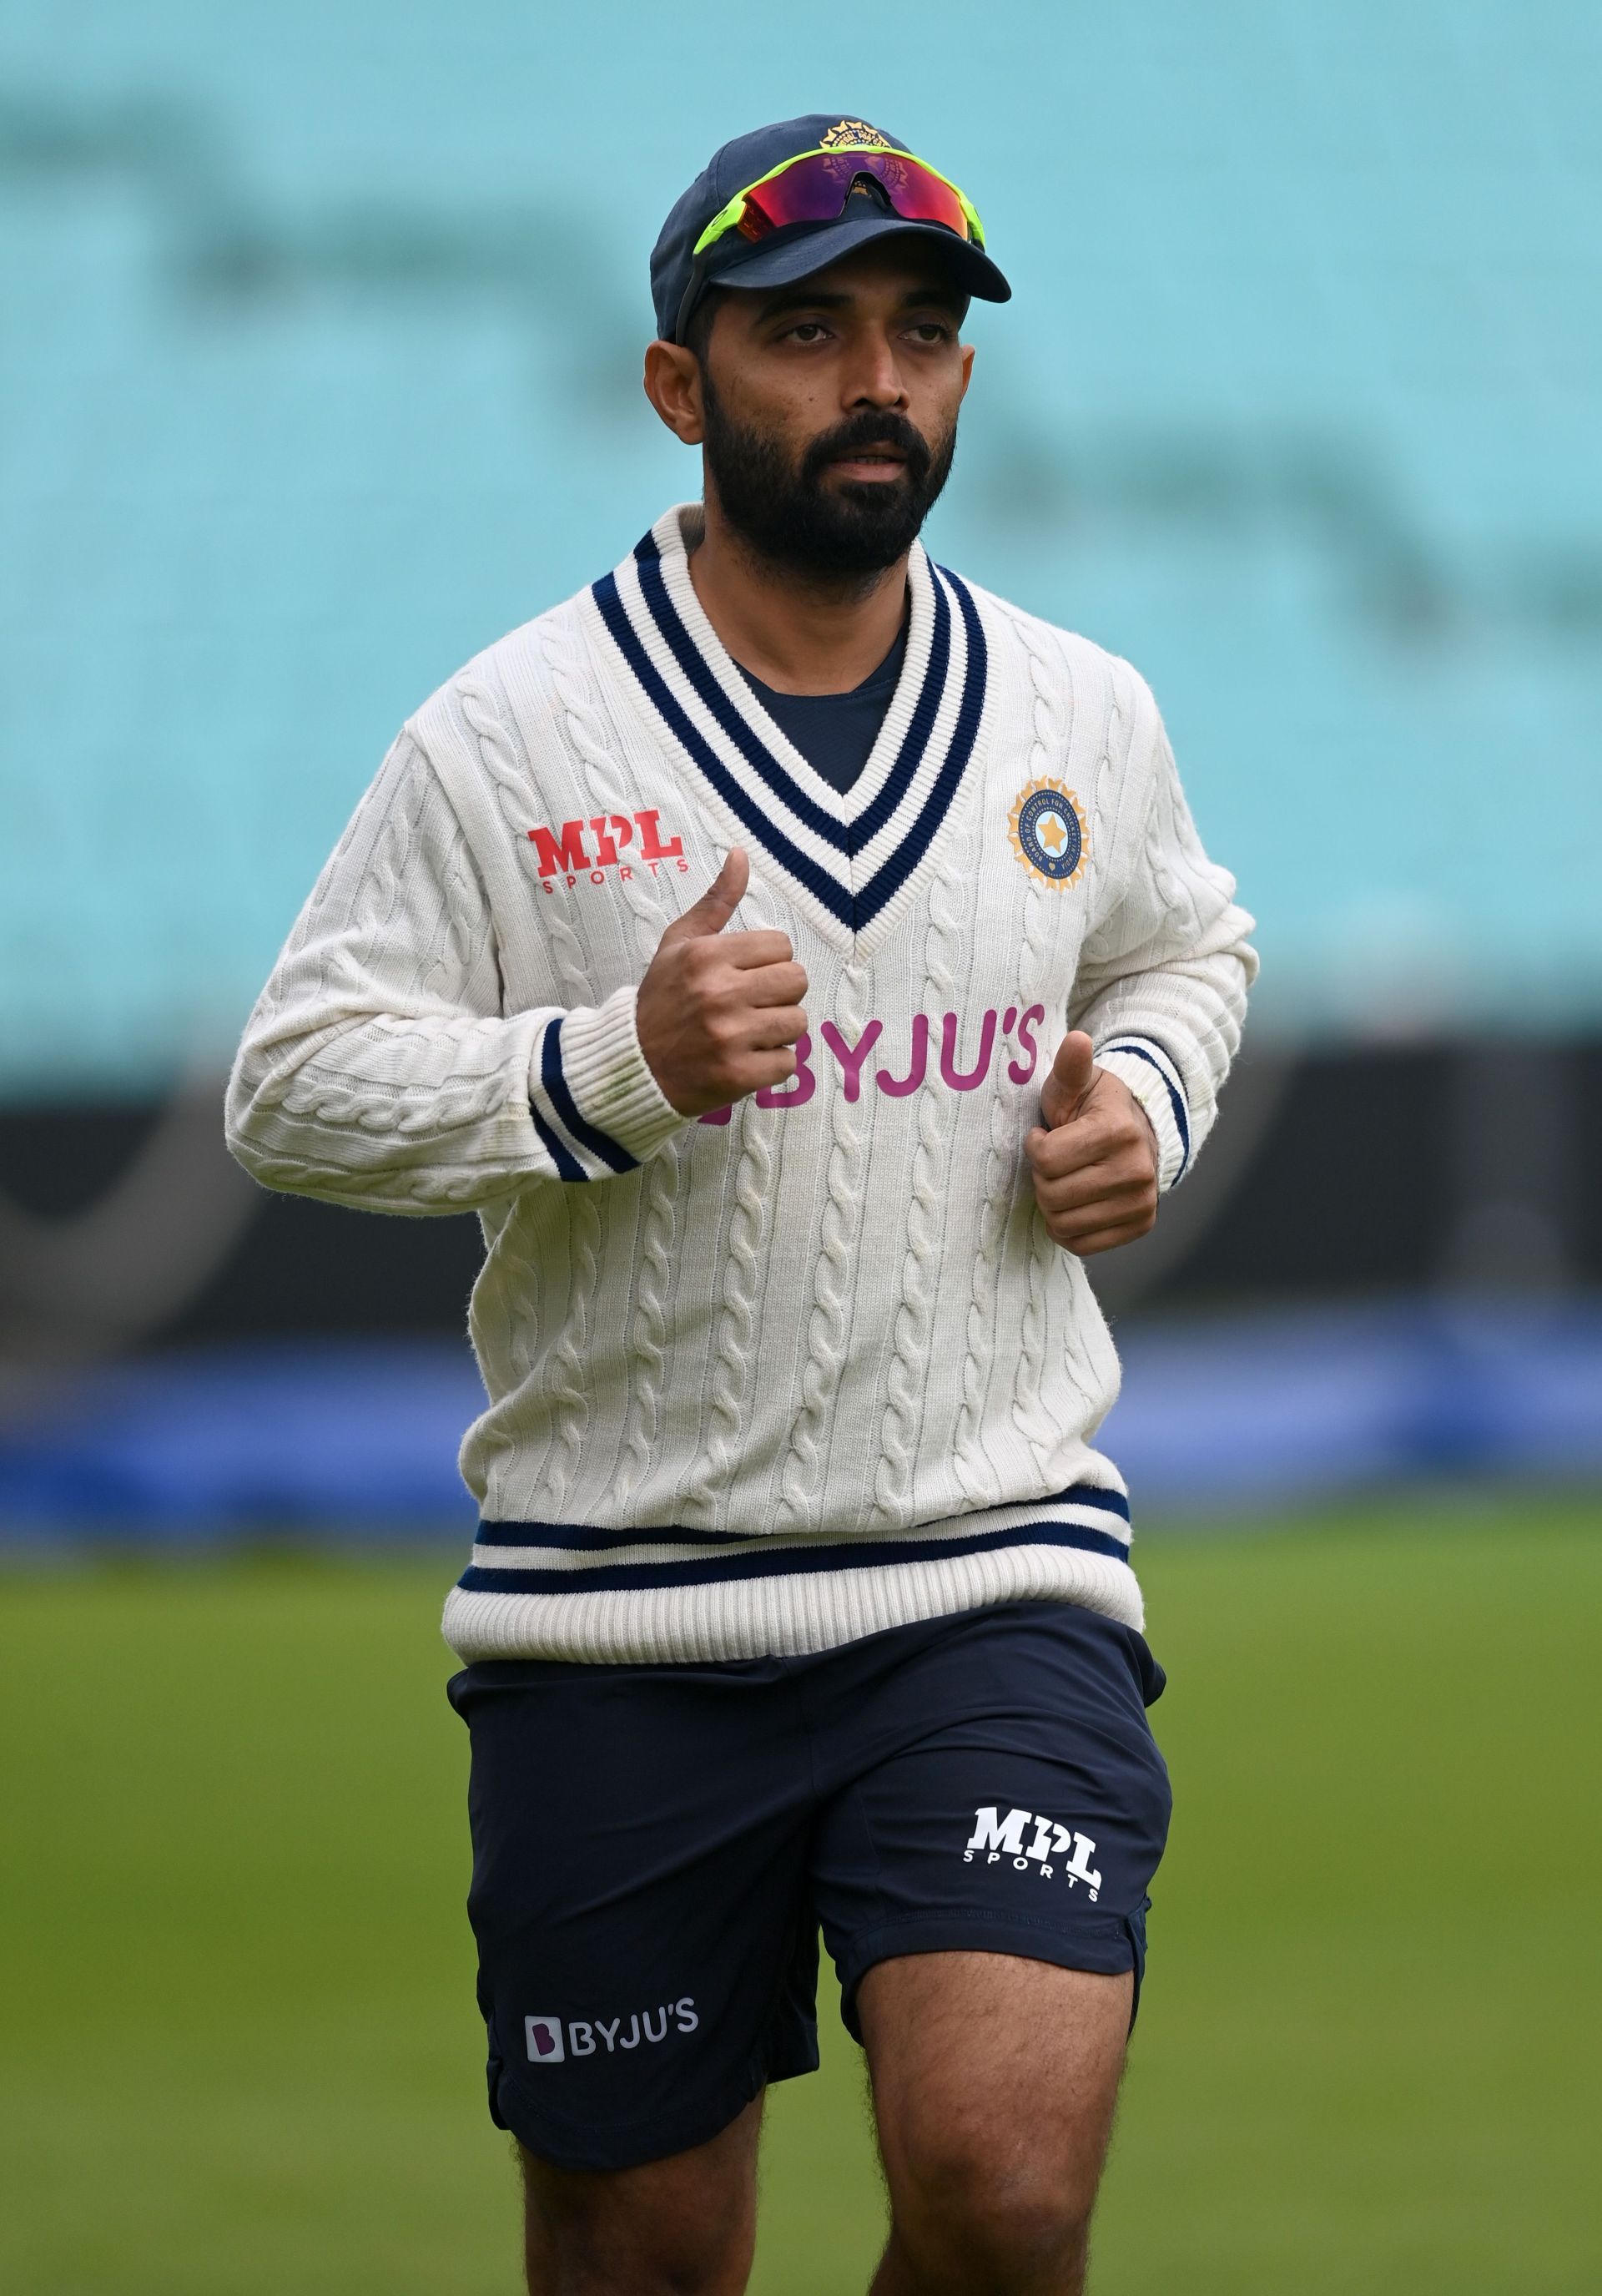 Mumbai skipper Ajinkya Rahane during an earlier India practice session